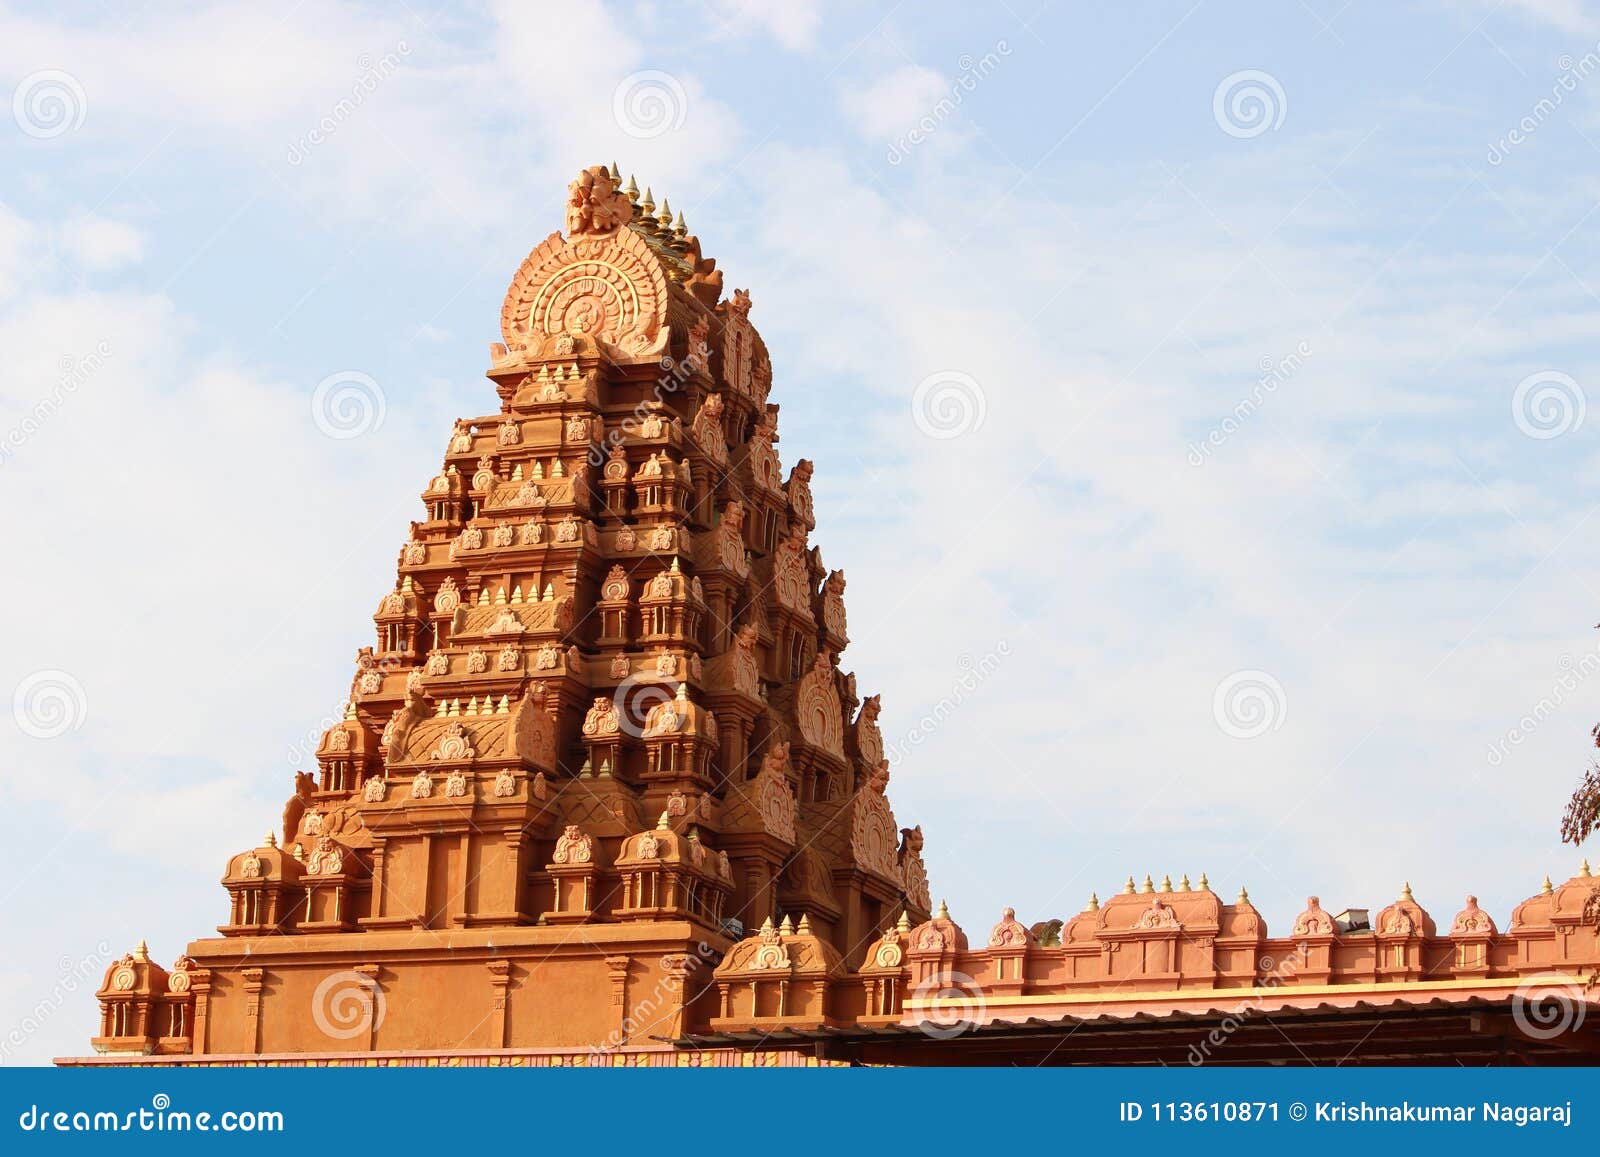 Temple Gopuram in india stock image. Image of indian - 113610871